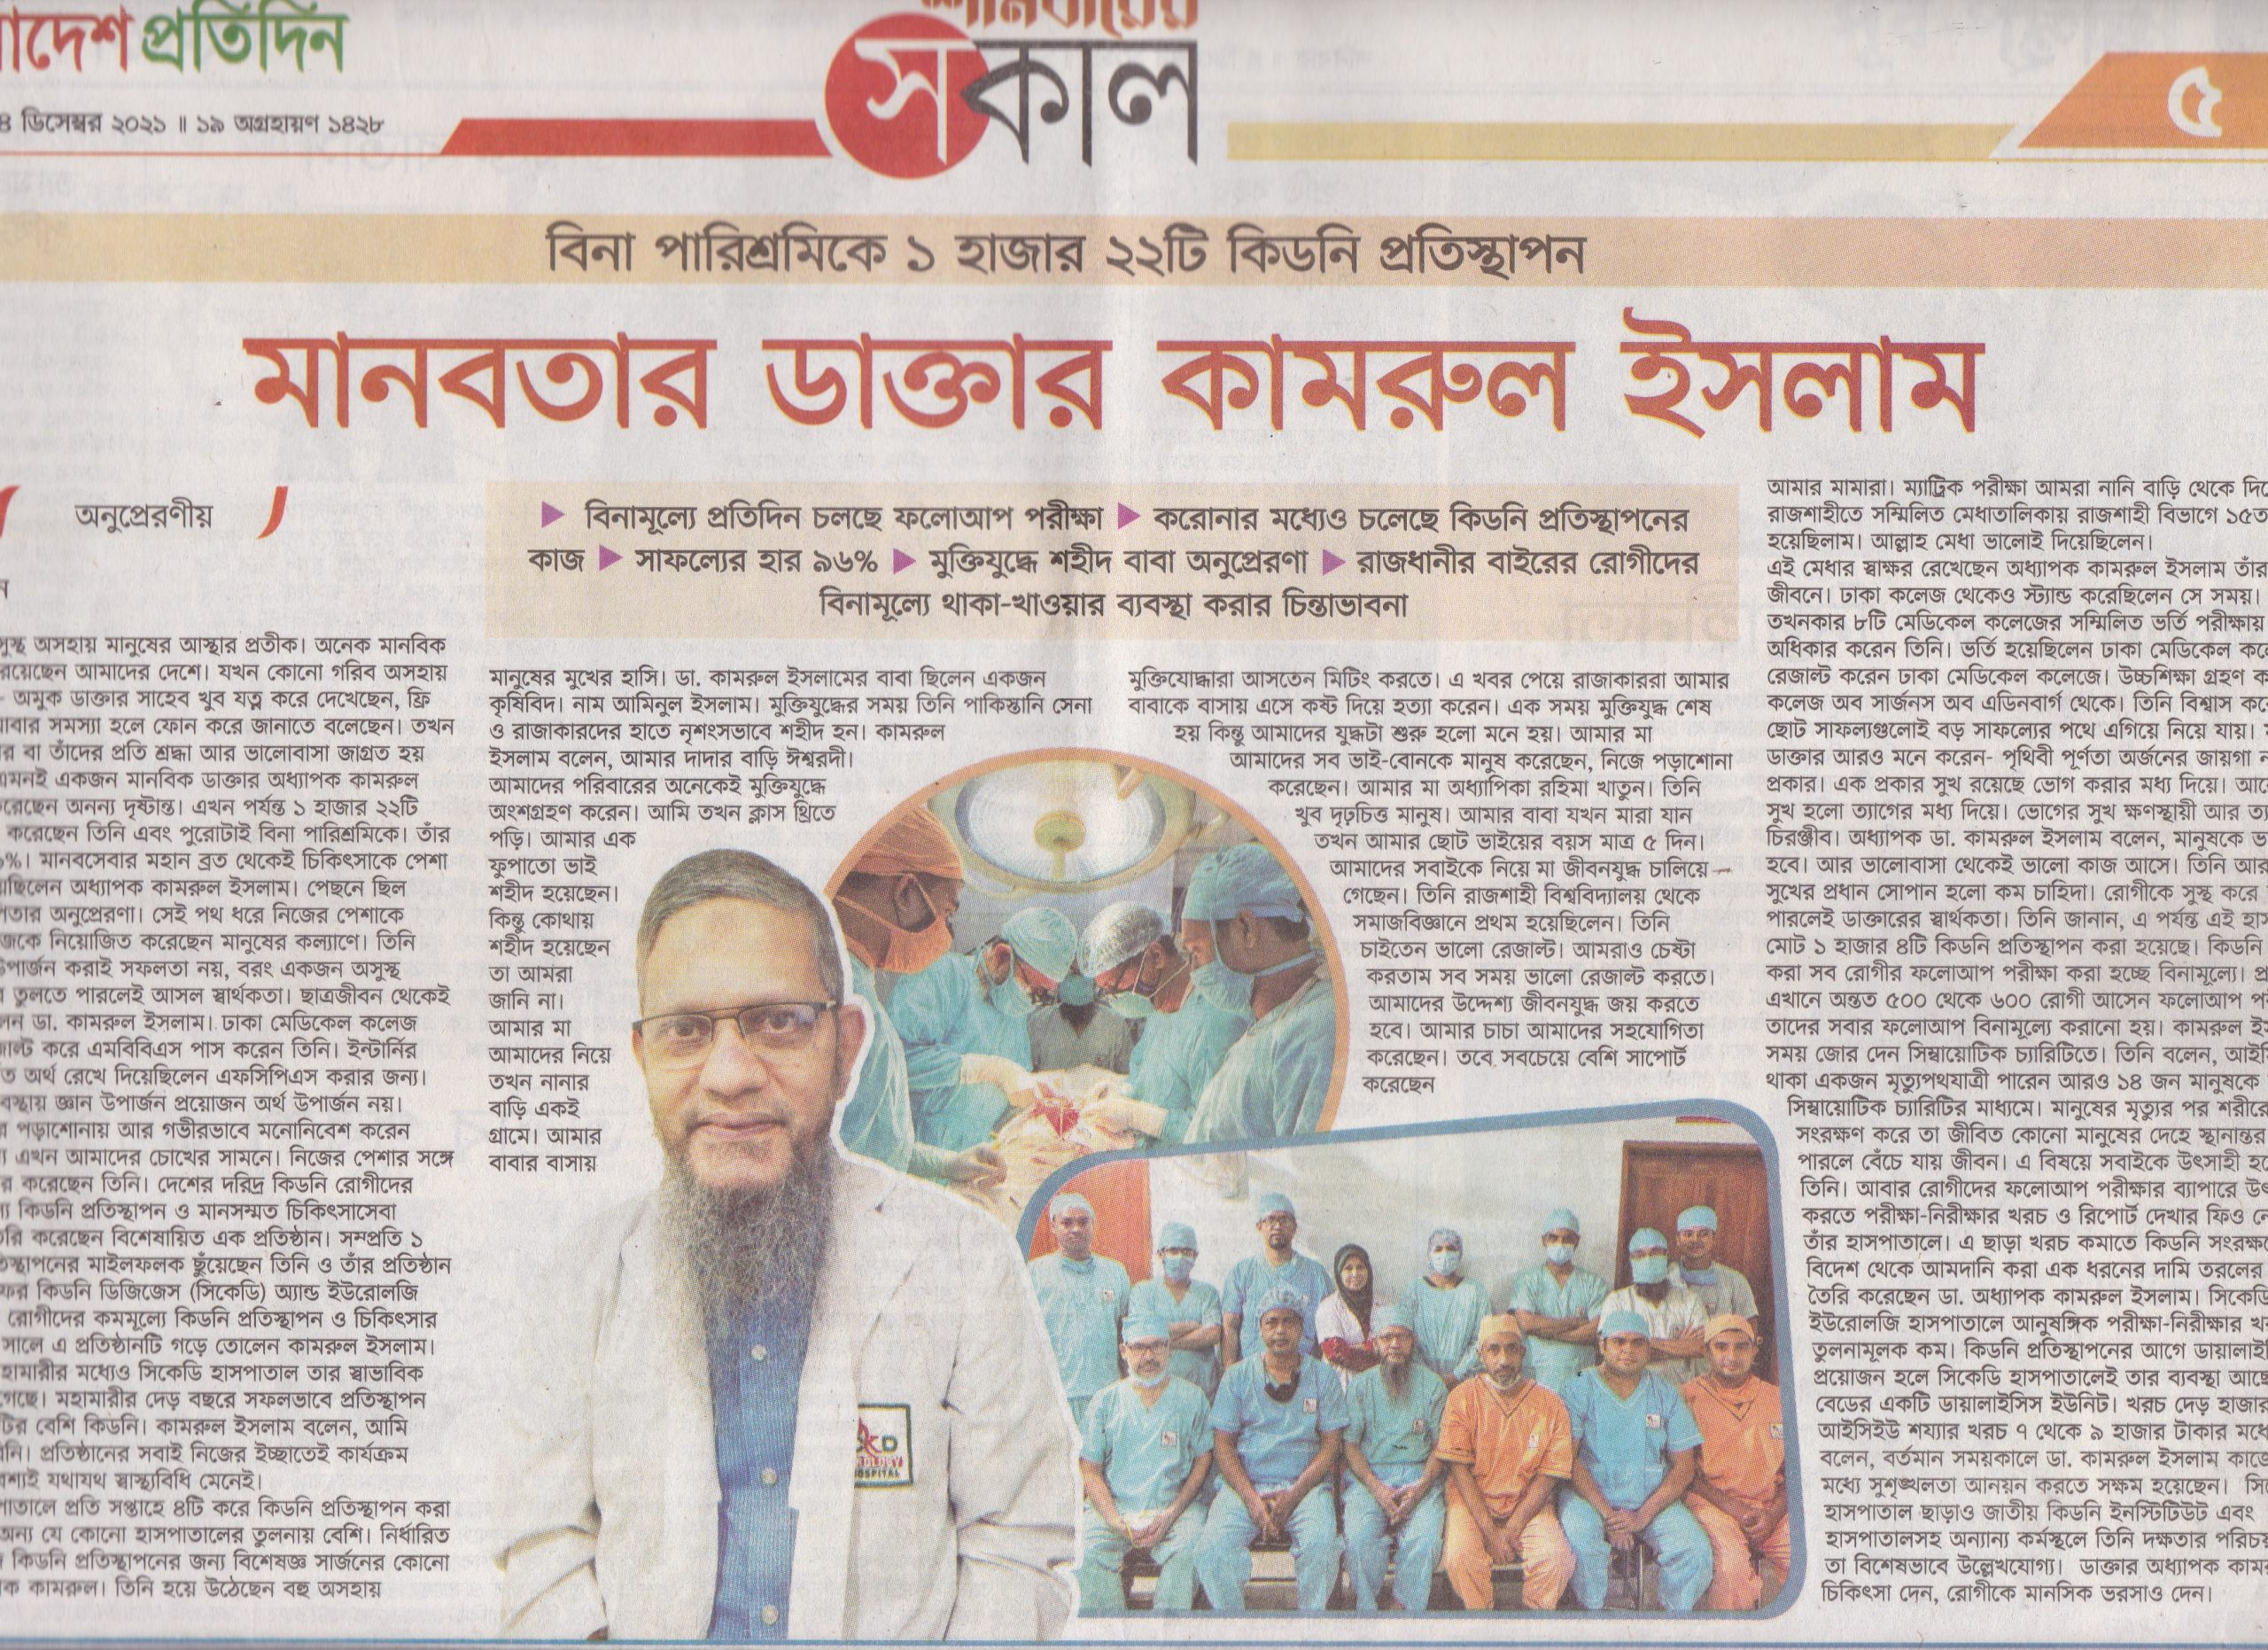 kidney transplant done by dr. kamrul islam